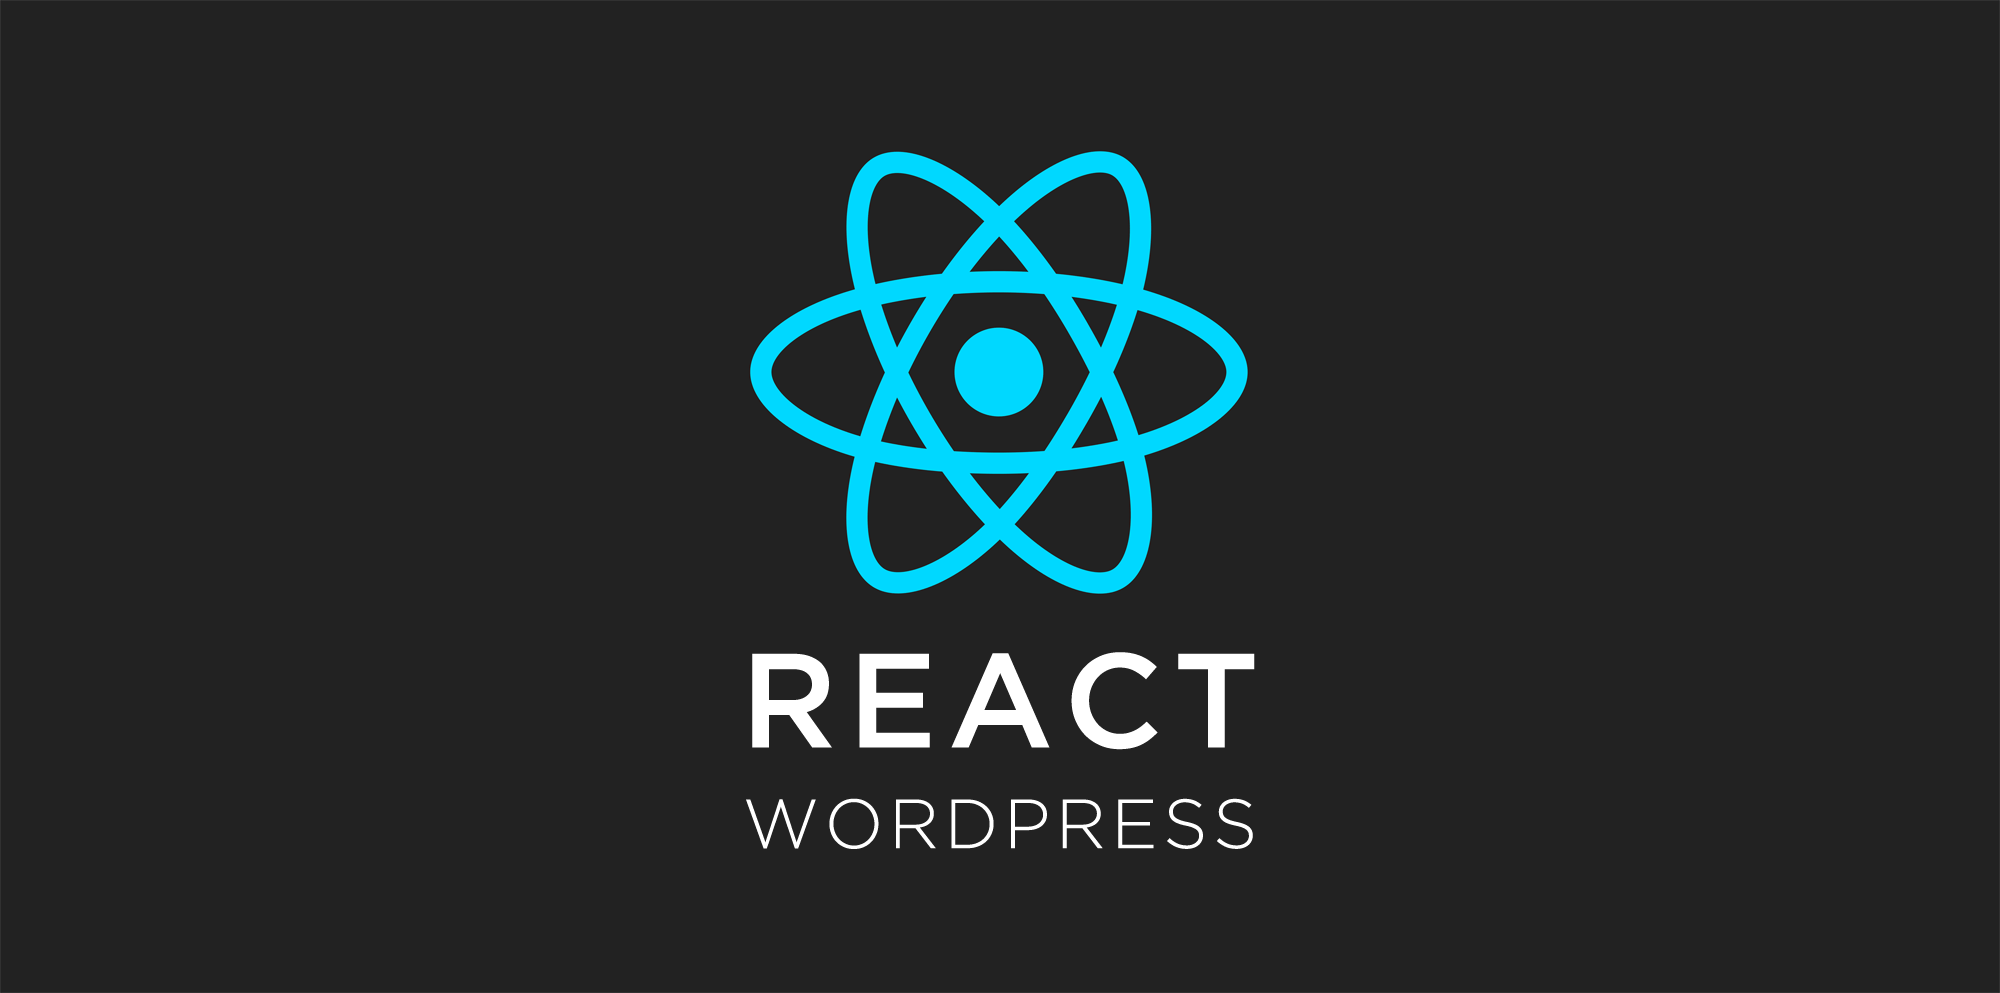 Using React with WordPress — Draft podcast